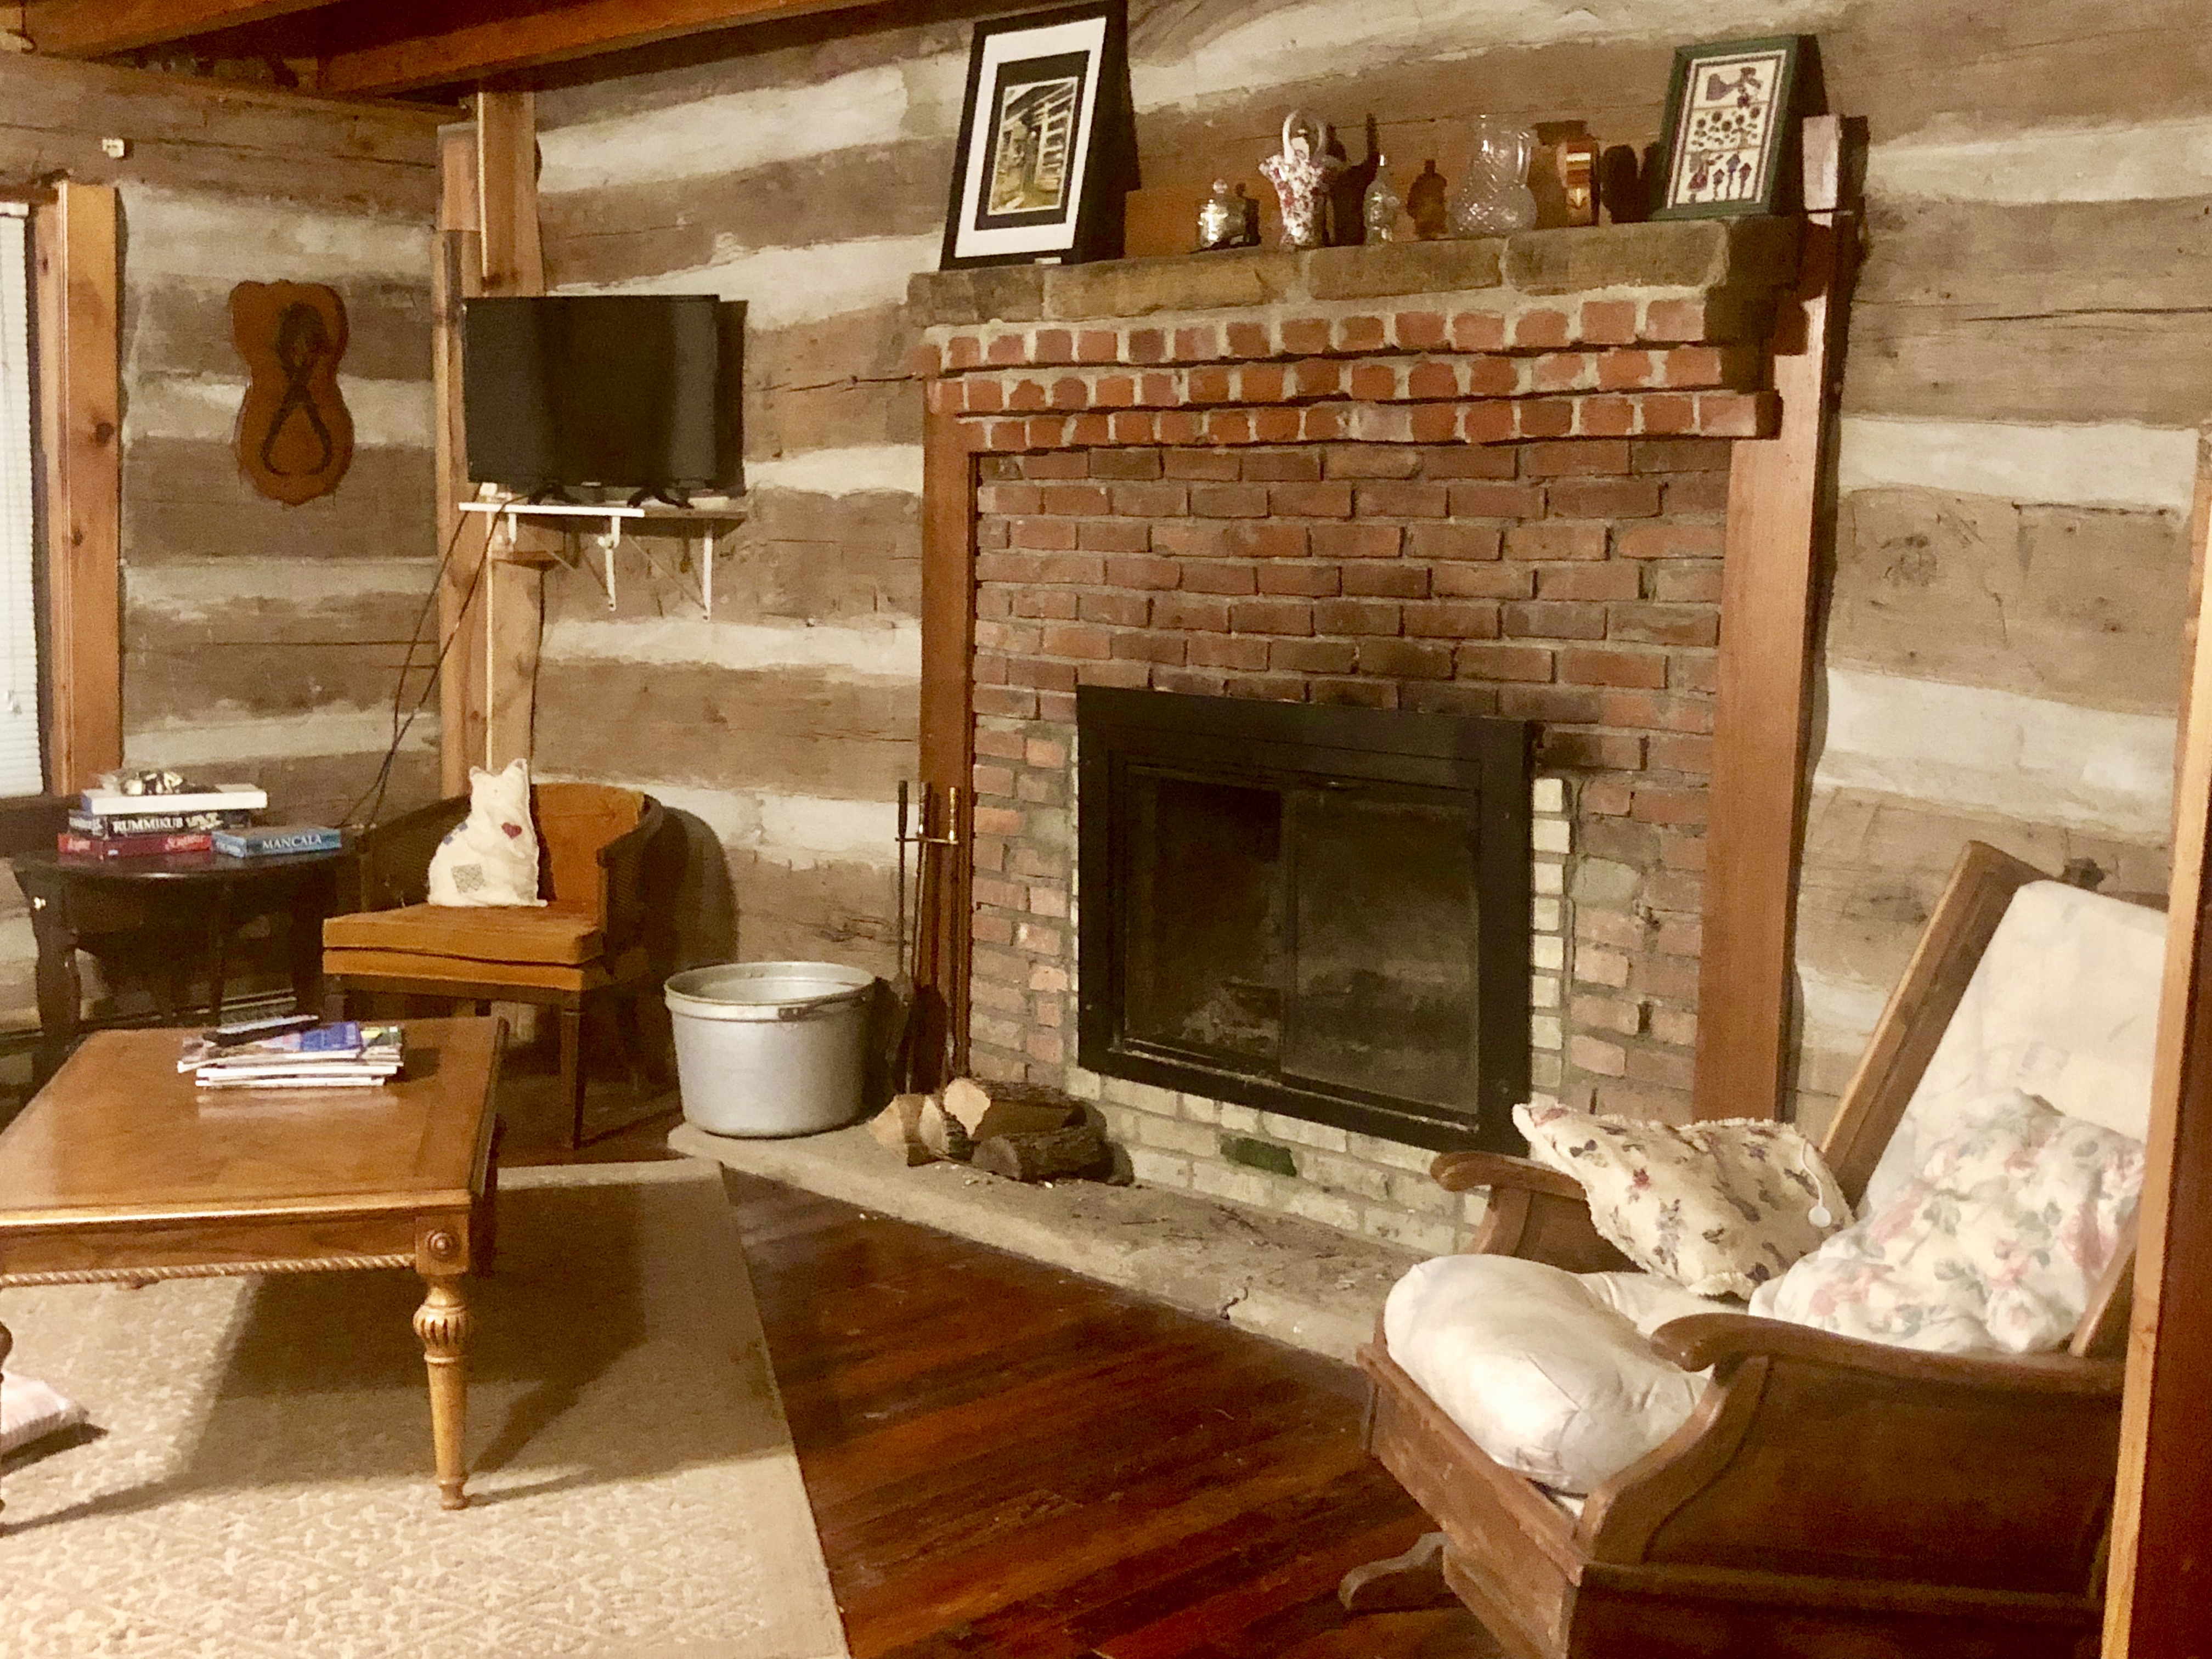 Authentic 1800's Shawnee National Forest Cabin Rentals : Olde Squat Inn , #petfriendly #cozy #rustic #quaint #historic #bedandbreakfast #fishingpond #cabinrentals #shawneenationalforest 